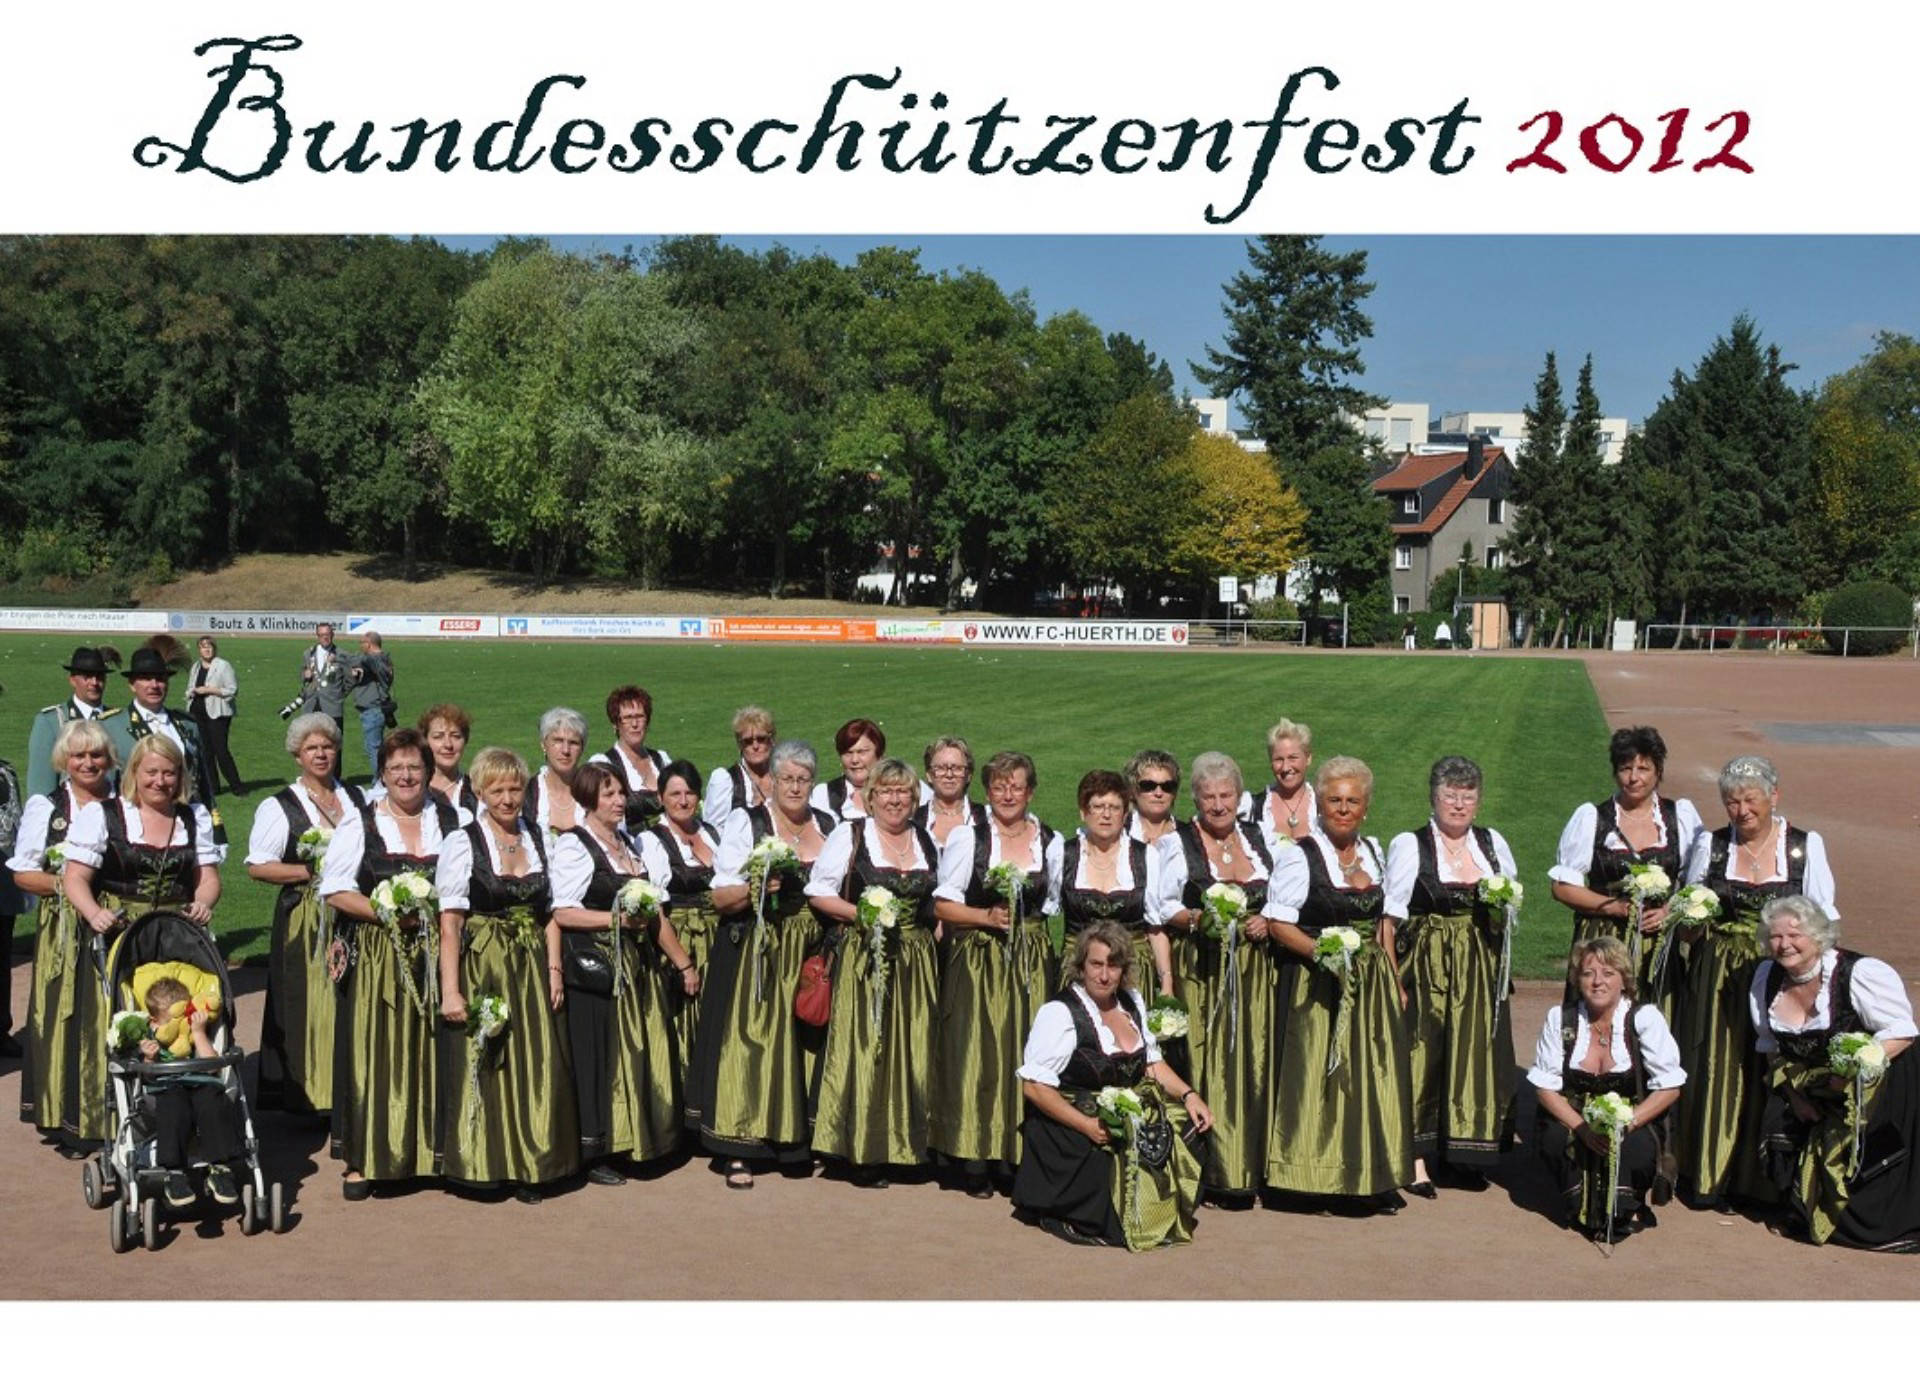 Unsere Schützenfrauen- Bundesschützenfest 2012